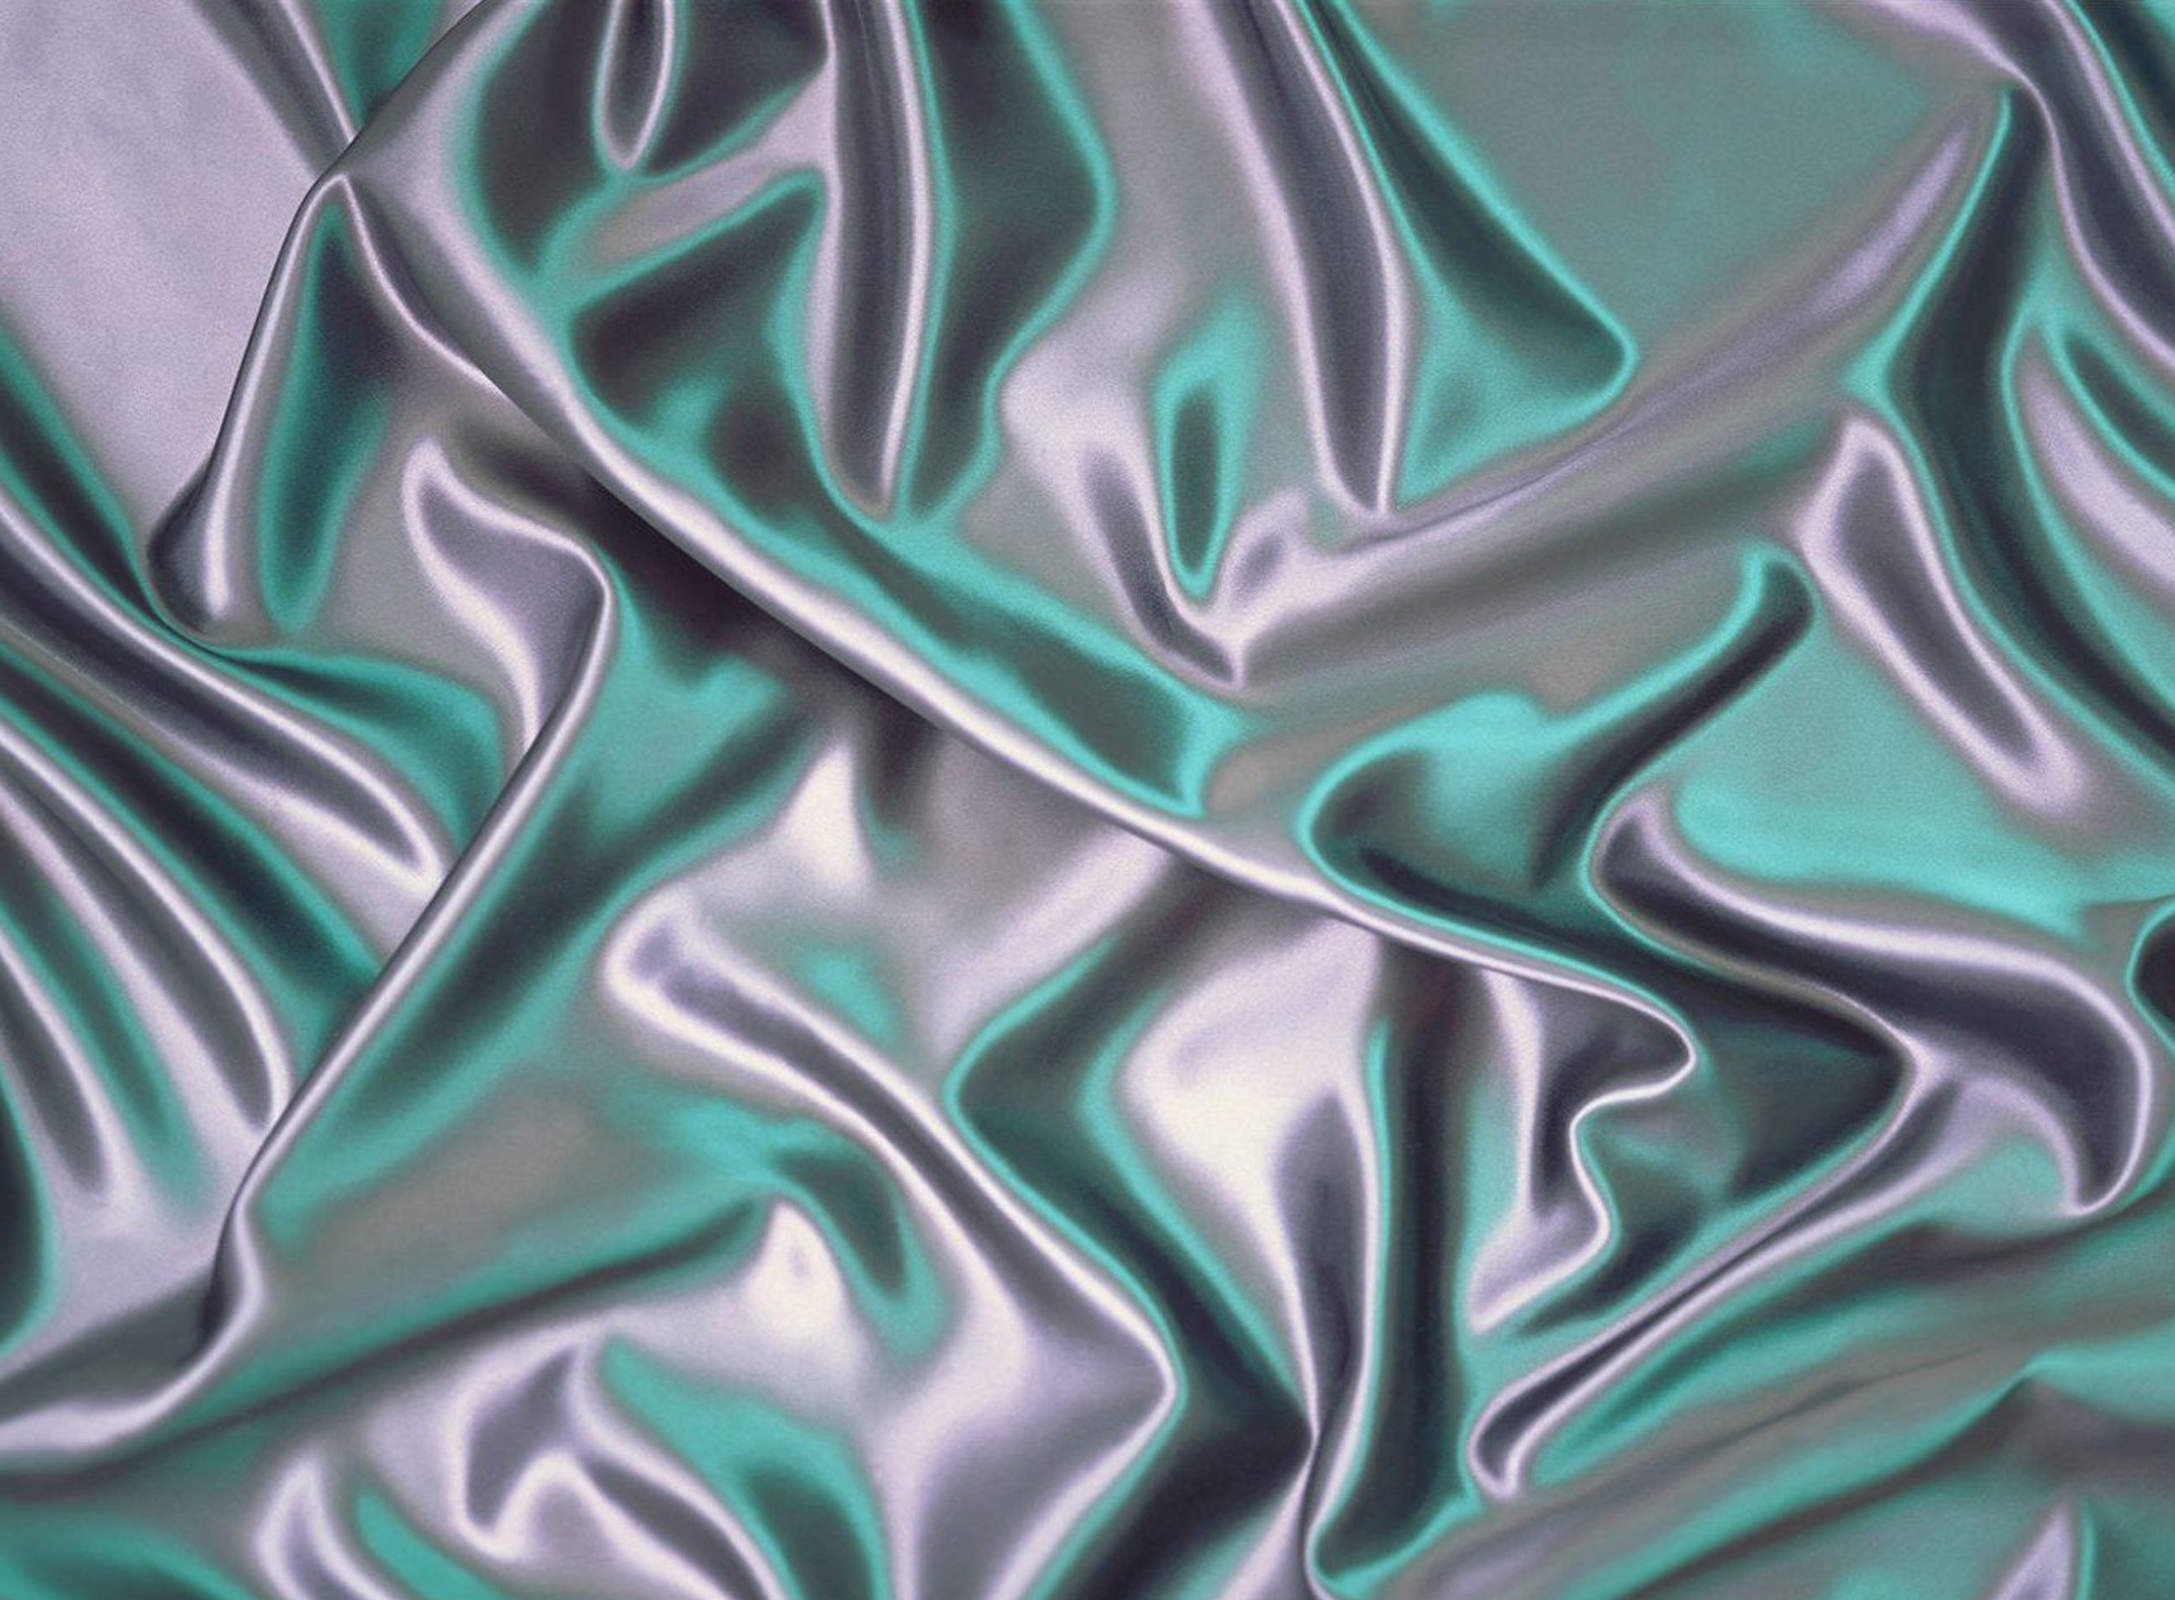 FREE 21+ Elegant Silk Fabric Texture Designs in PSD | Vector EPS